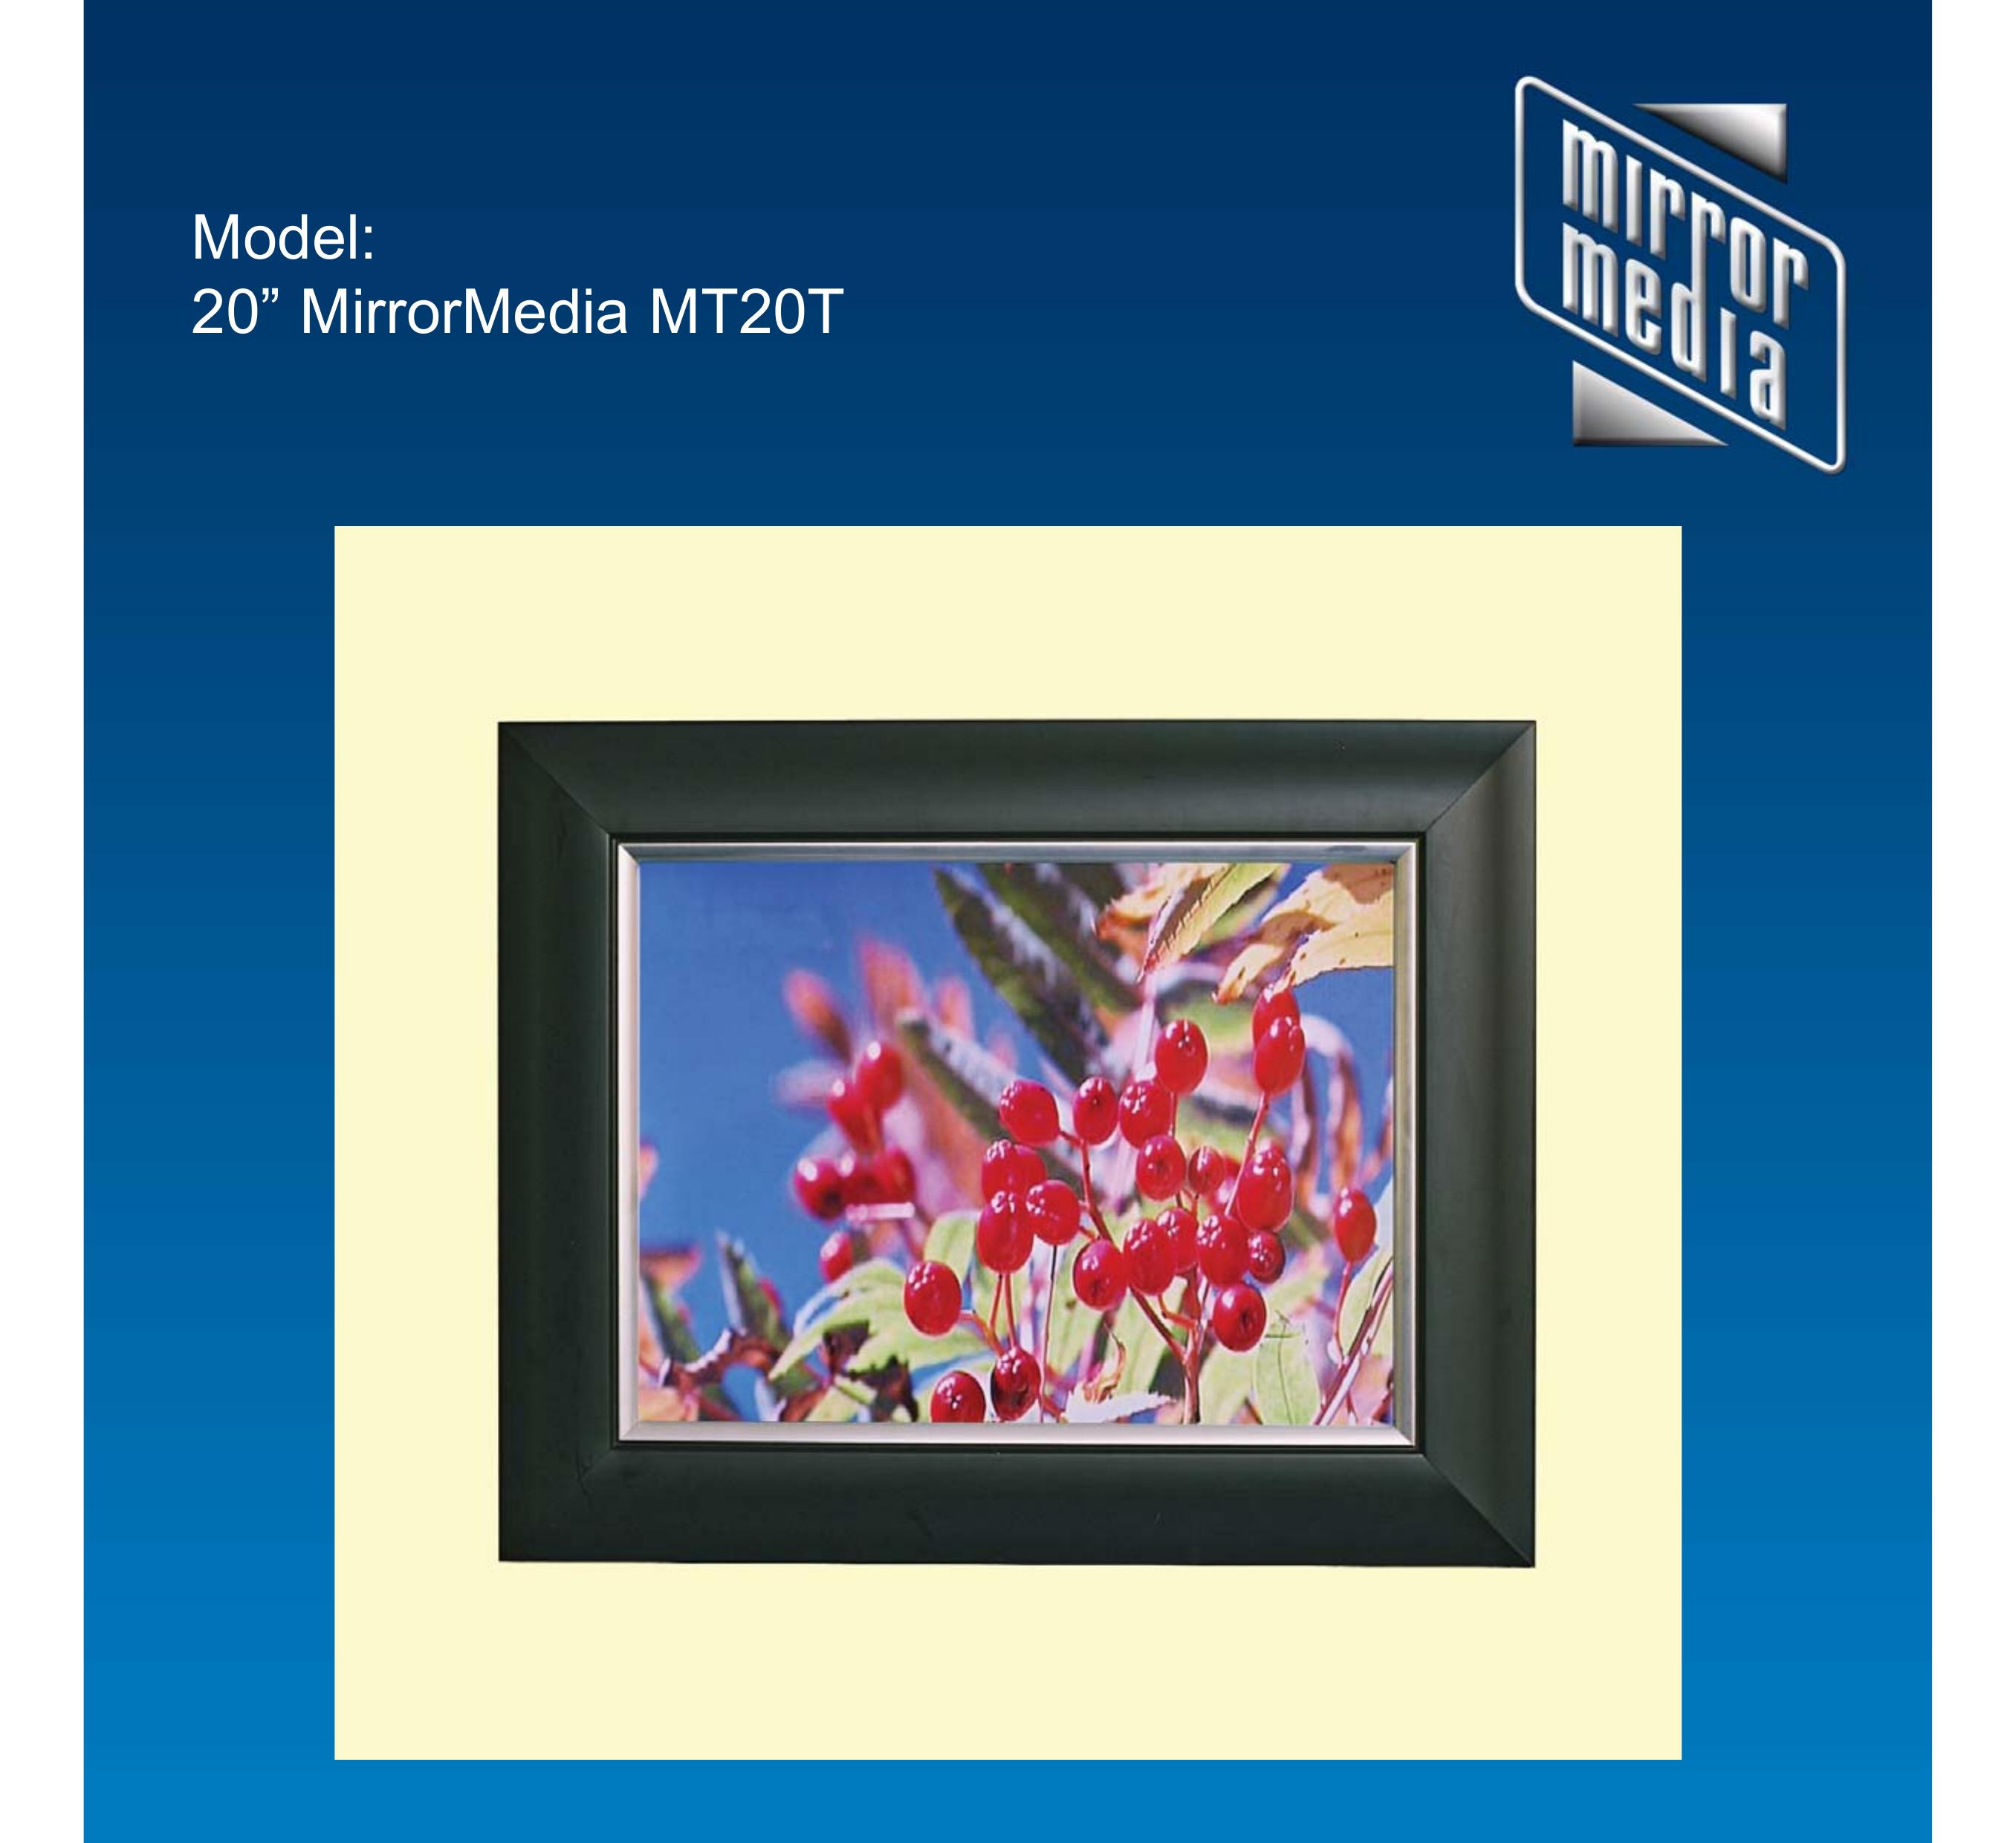 Mirror Media MT20T Digital Photo Frame User Manual